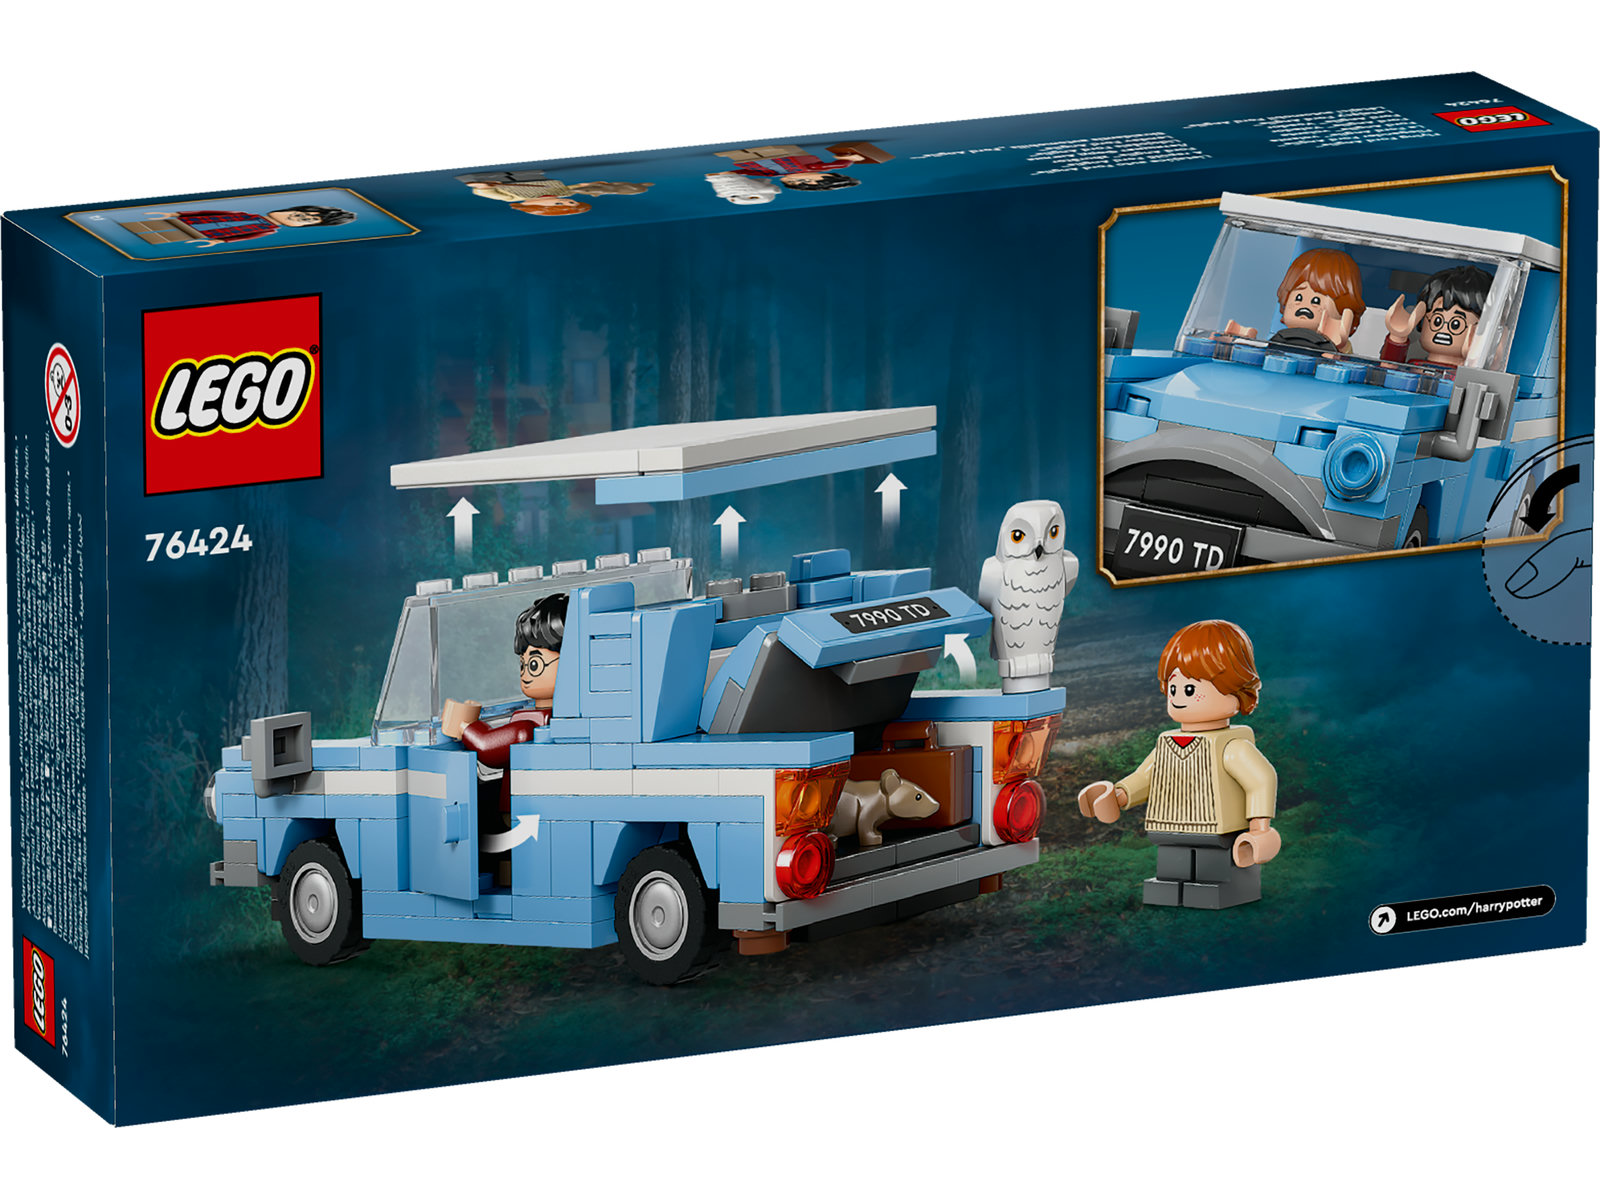 LEGO® Harry Potter™ 76424 - Fliegender Ford Anglia™